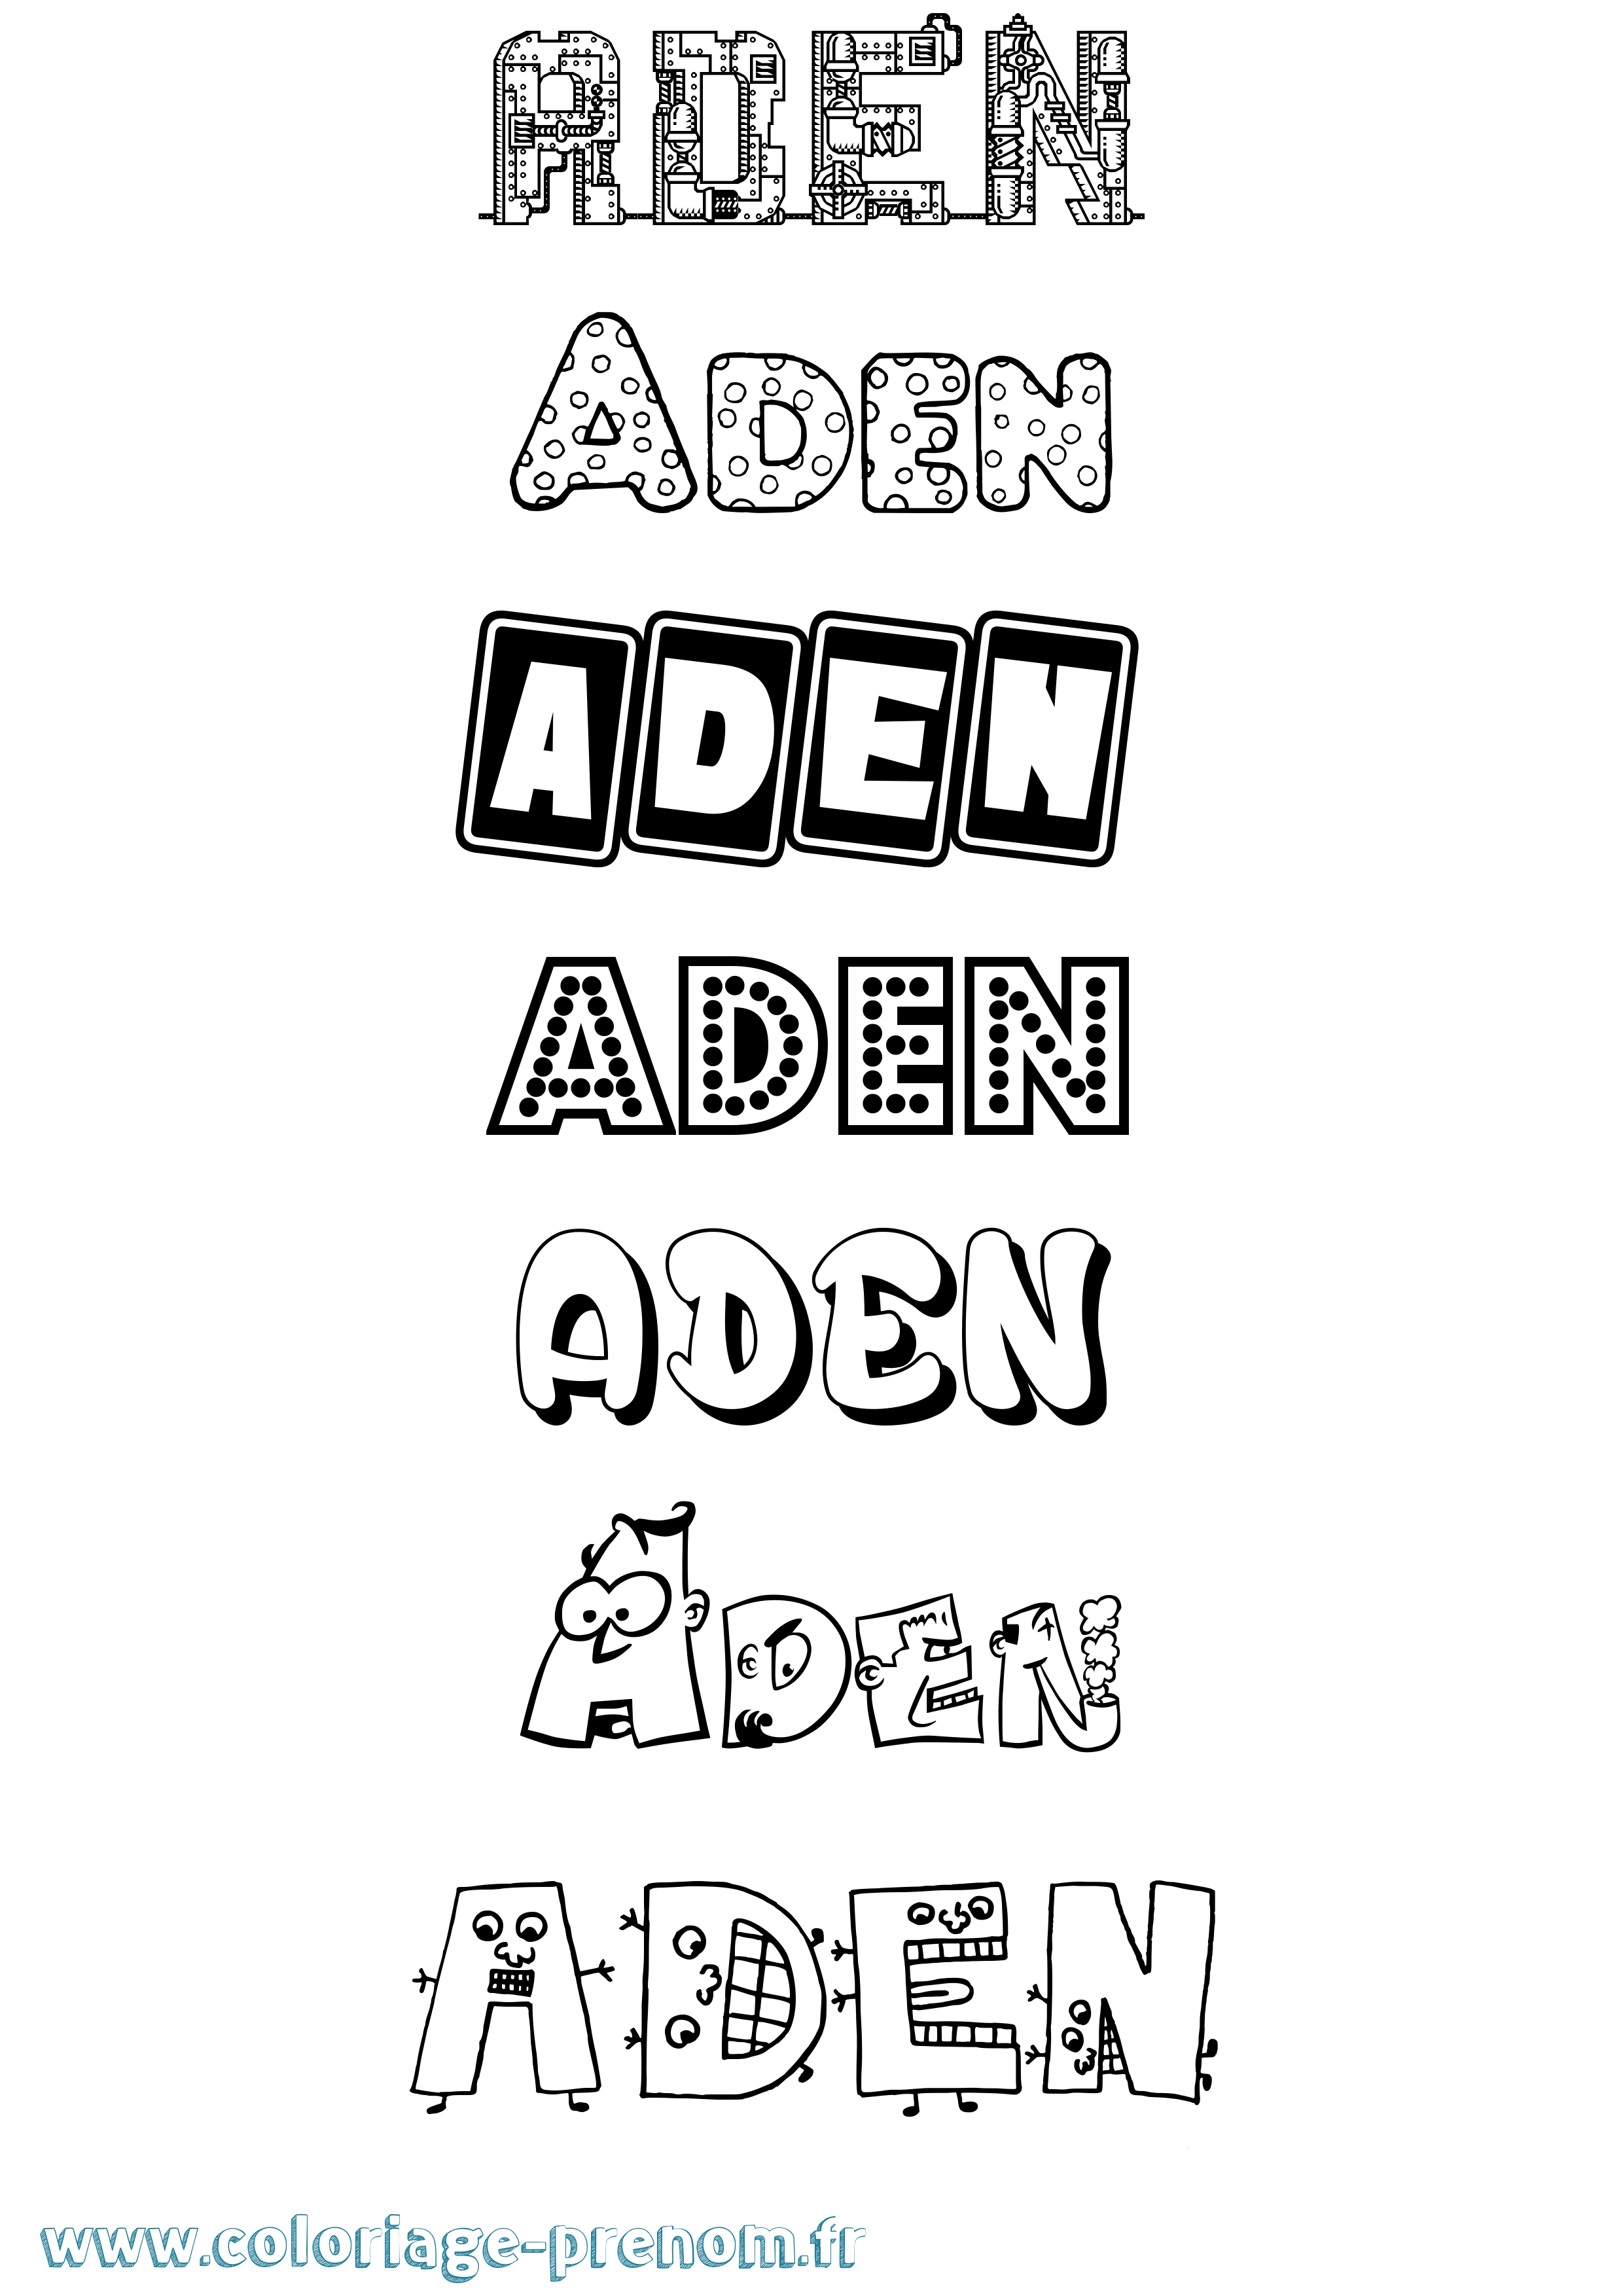 Coloriage prénom Aden